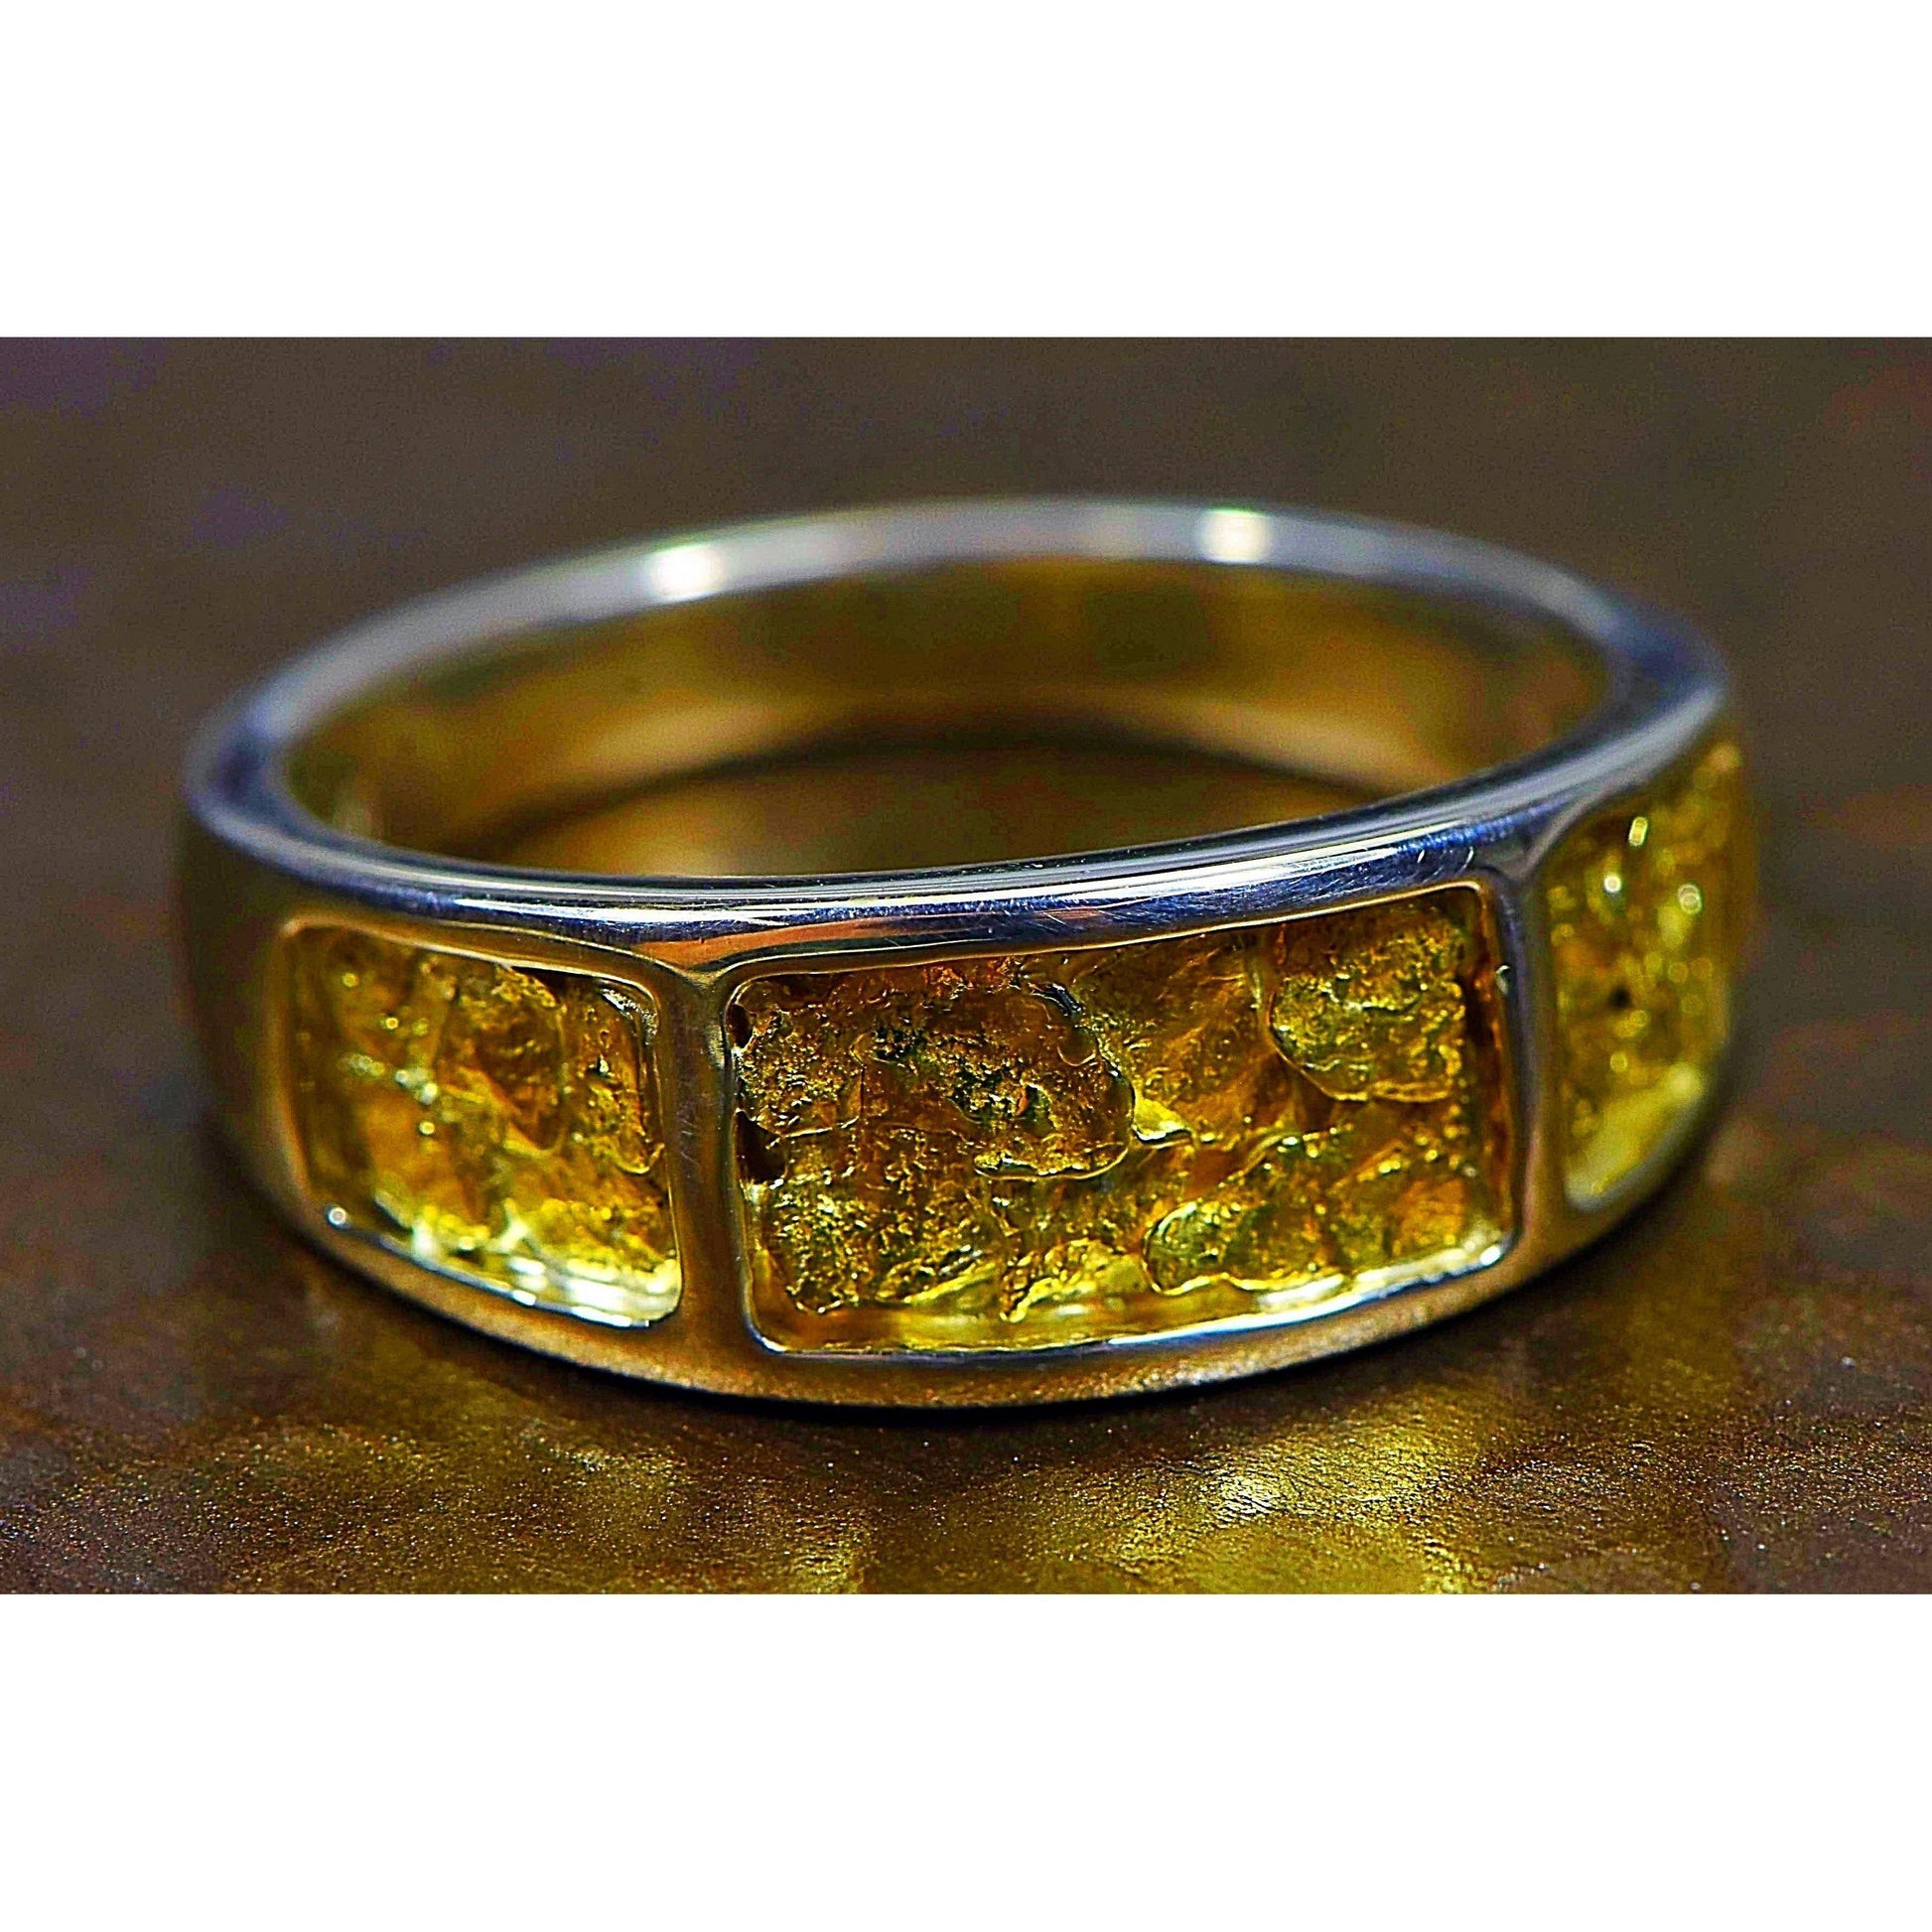 Orocal Gold Nugget Men's Ring RM732NSS-Destination Gold Detectors